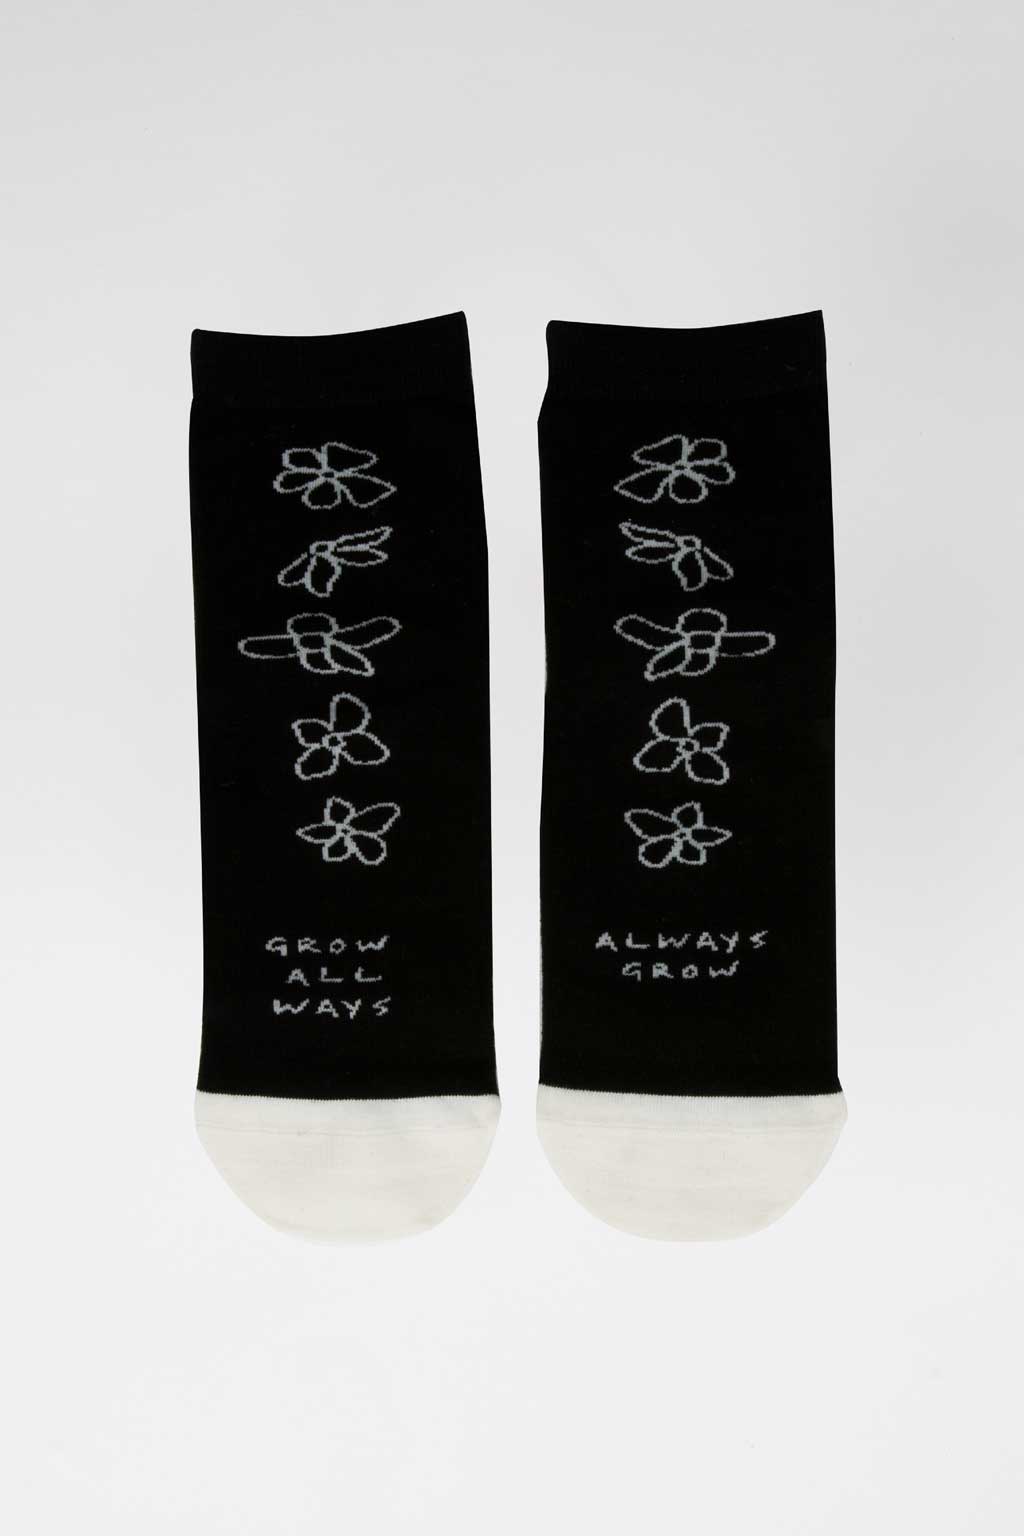 Tailored Union Collaborative Sock